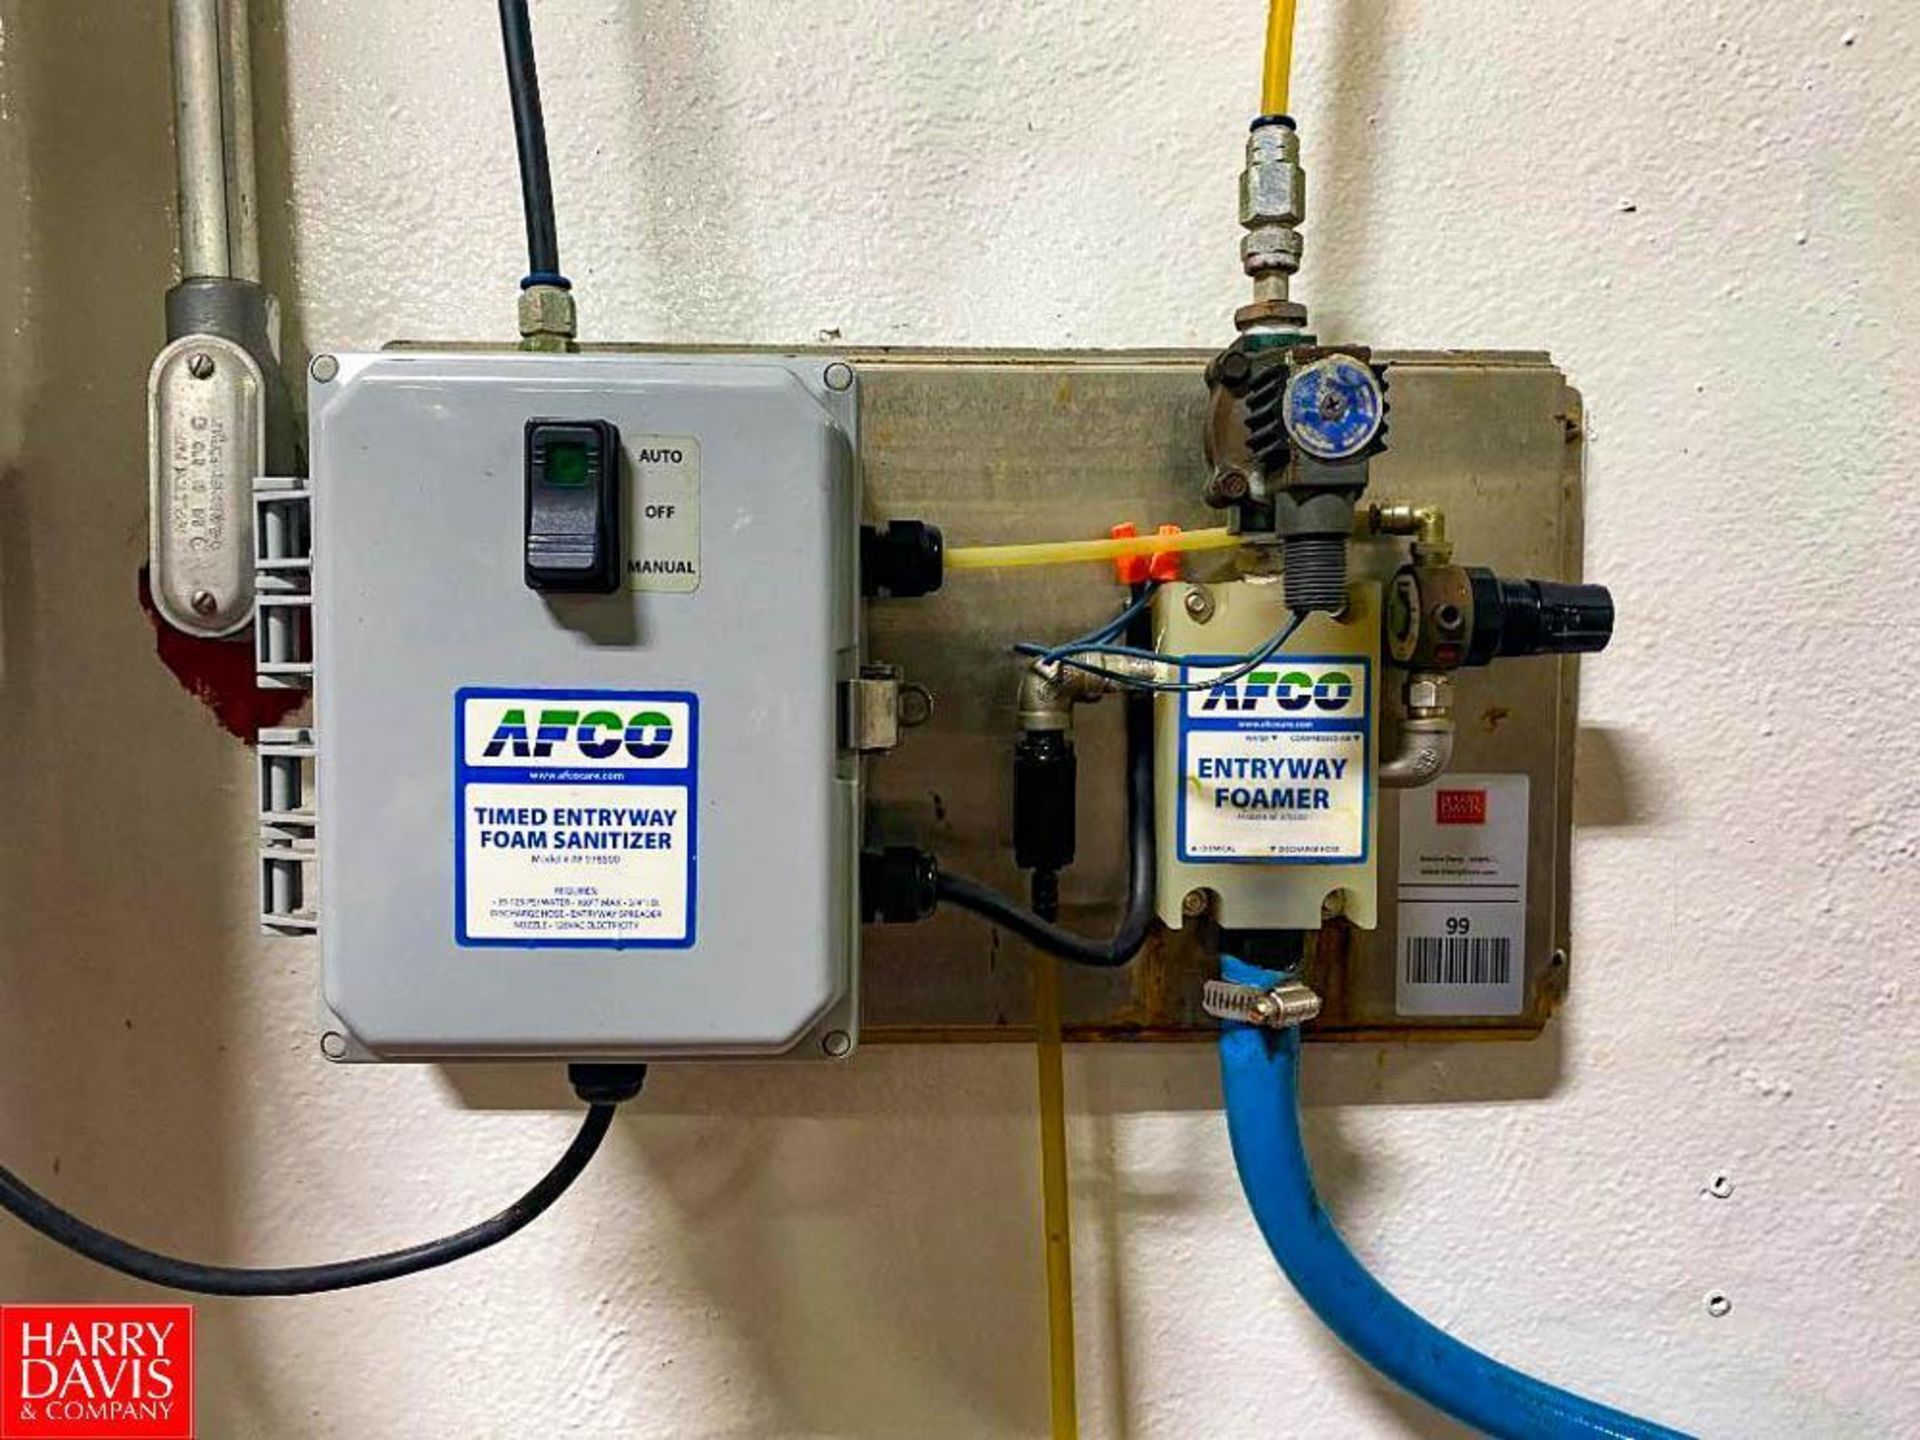 Afco Timed Entryway Foam Sanitizer - Rigging Fee: $200